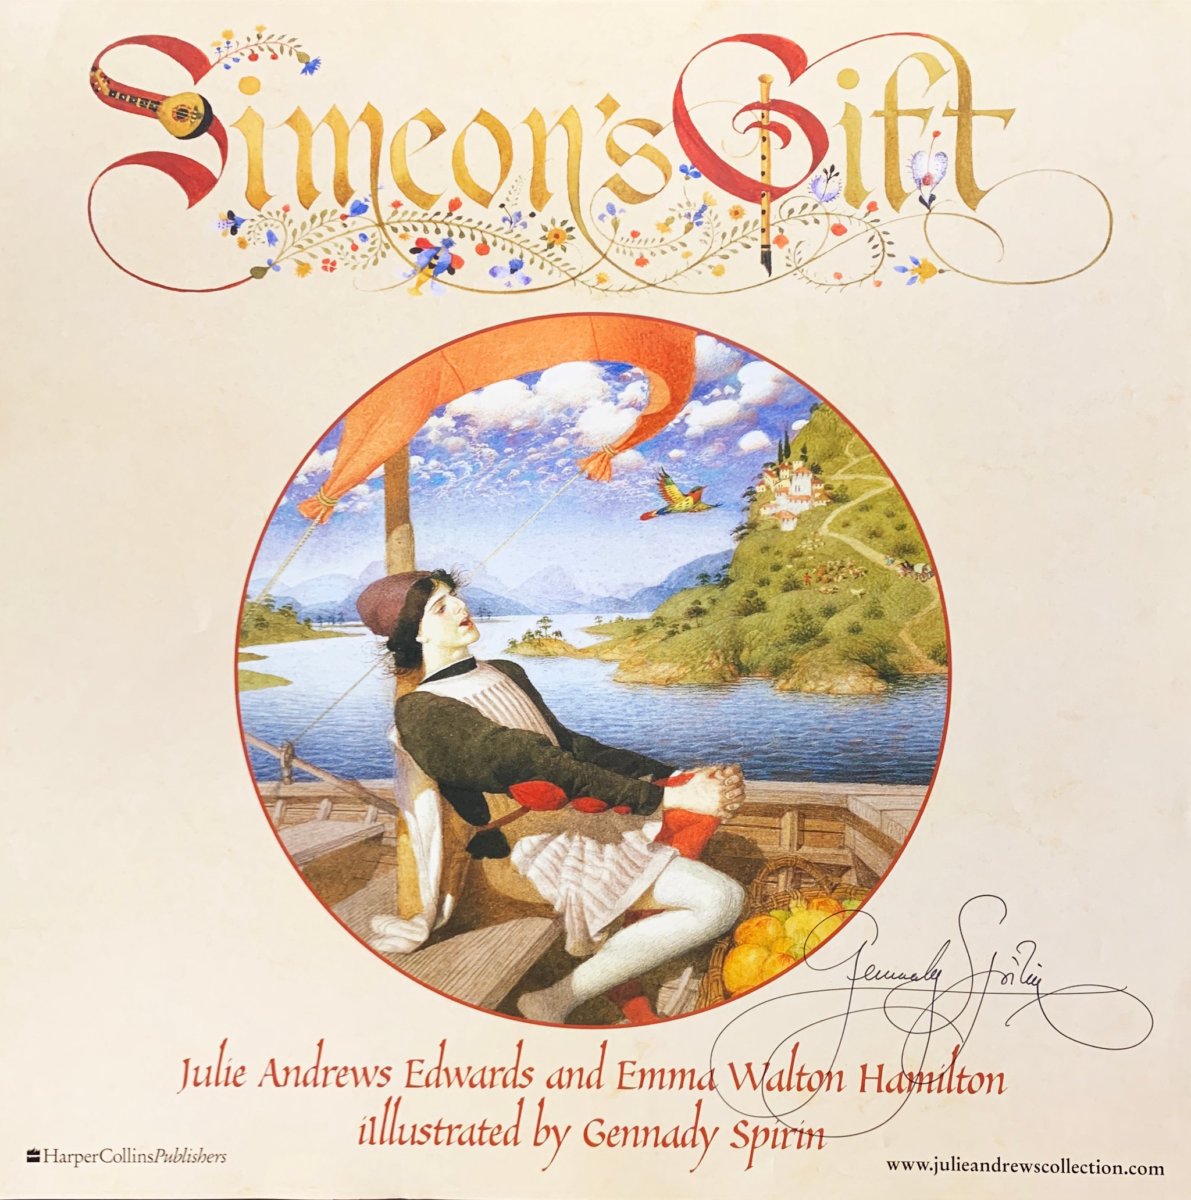 "Simeon's Gift"